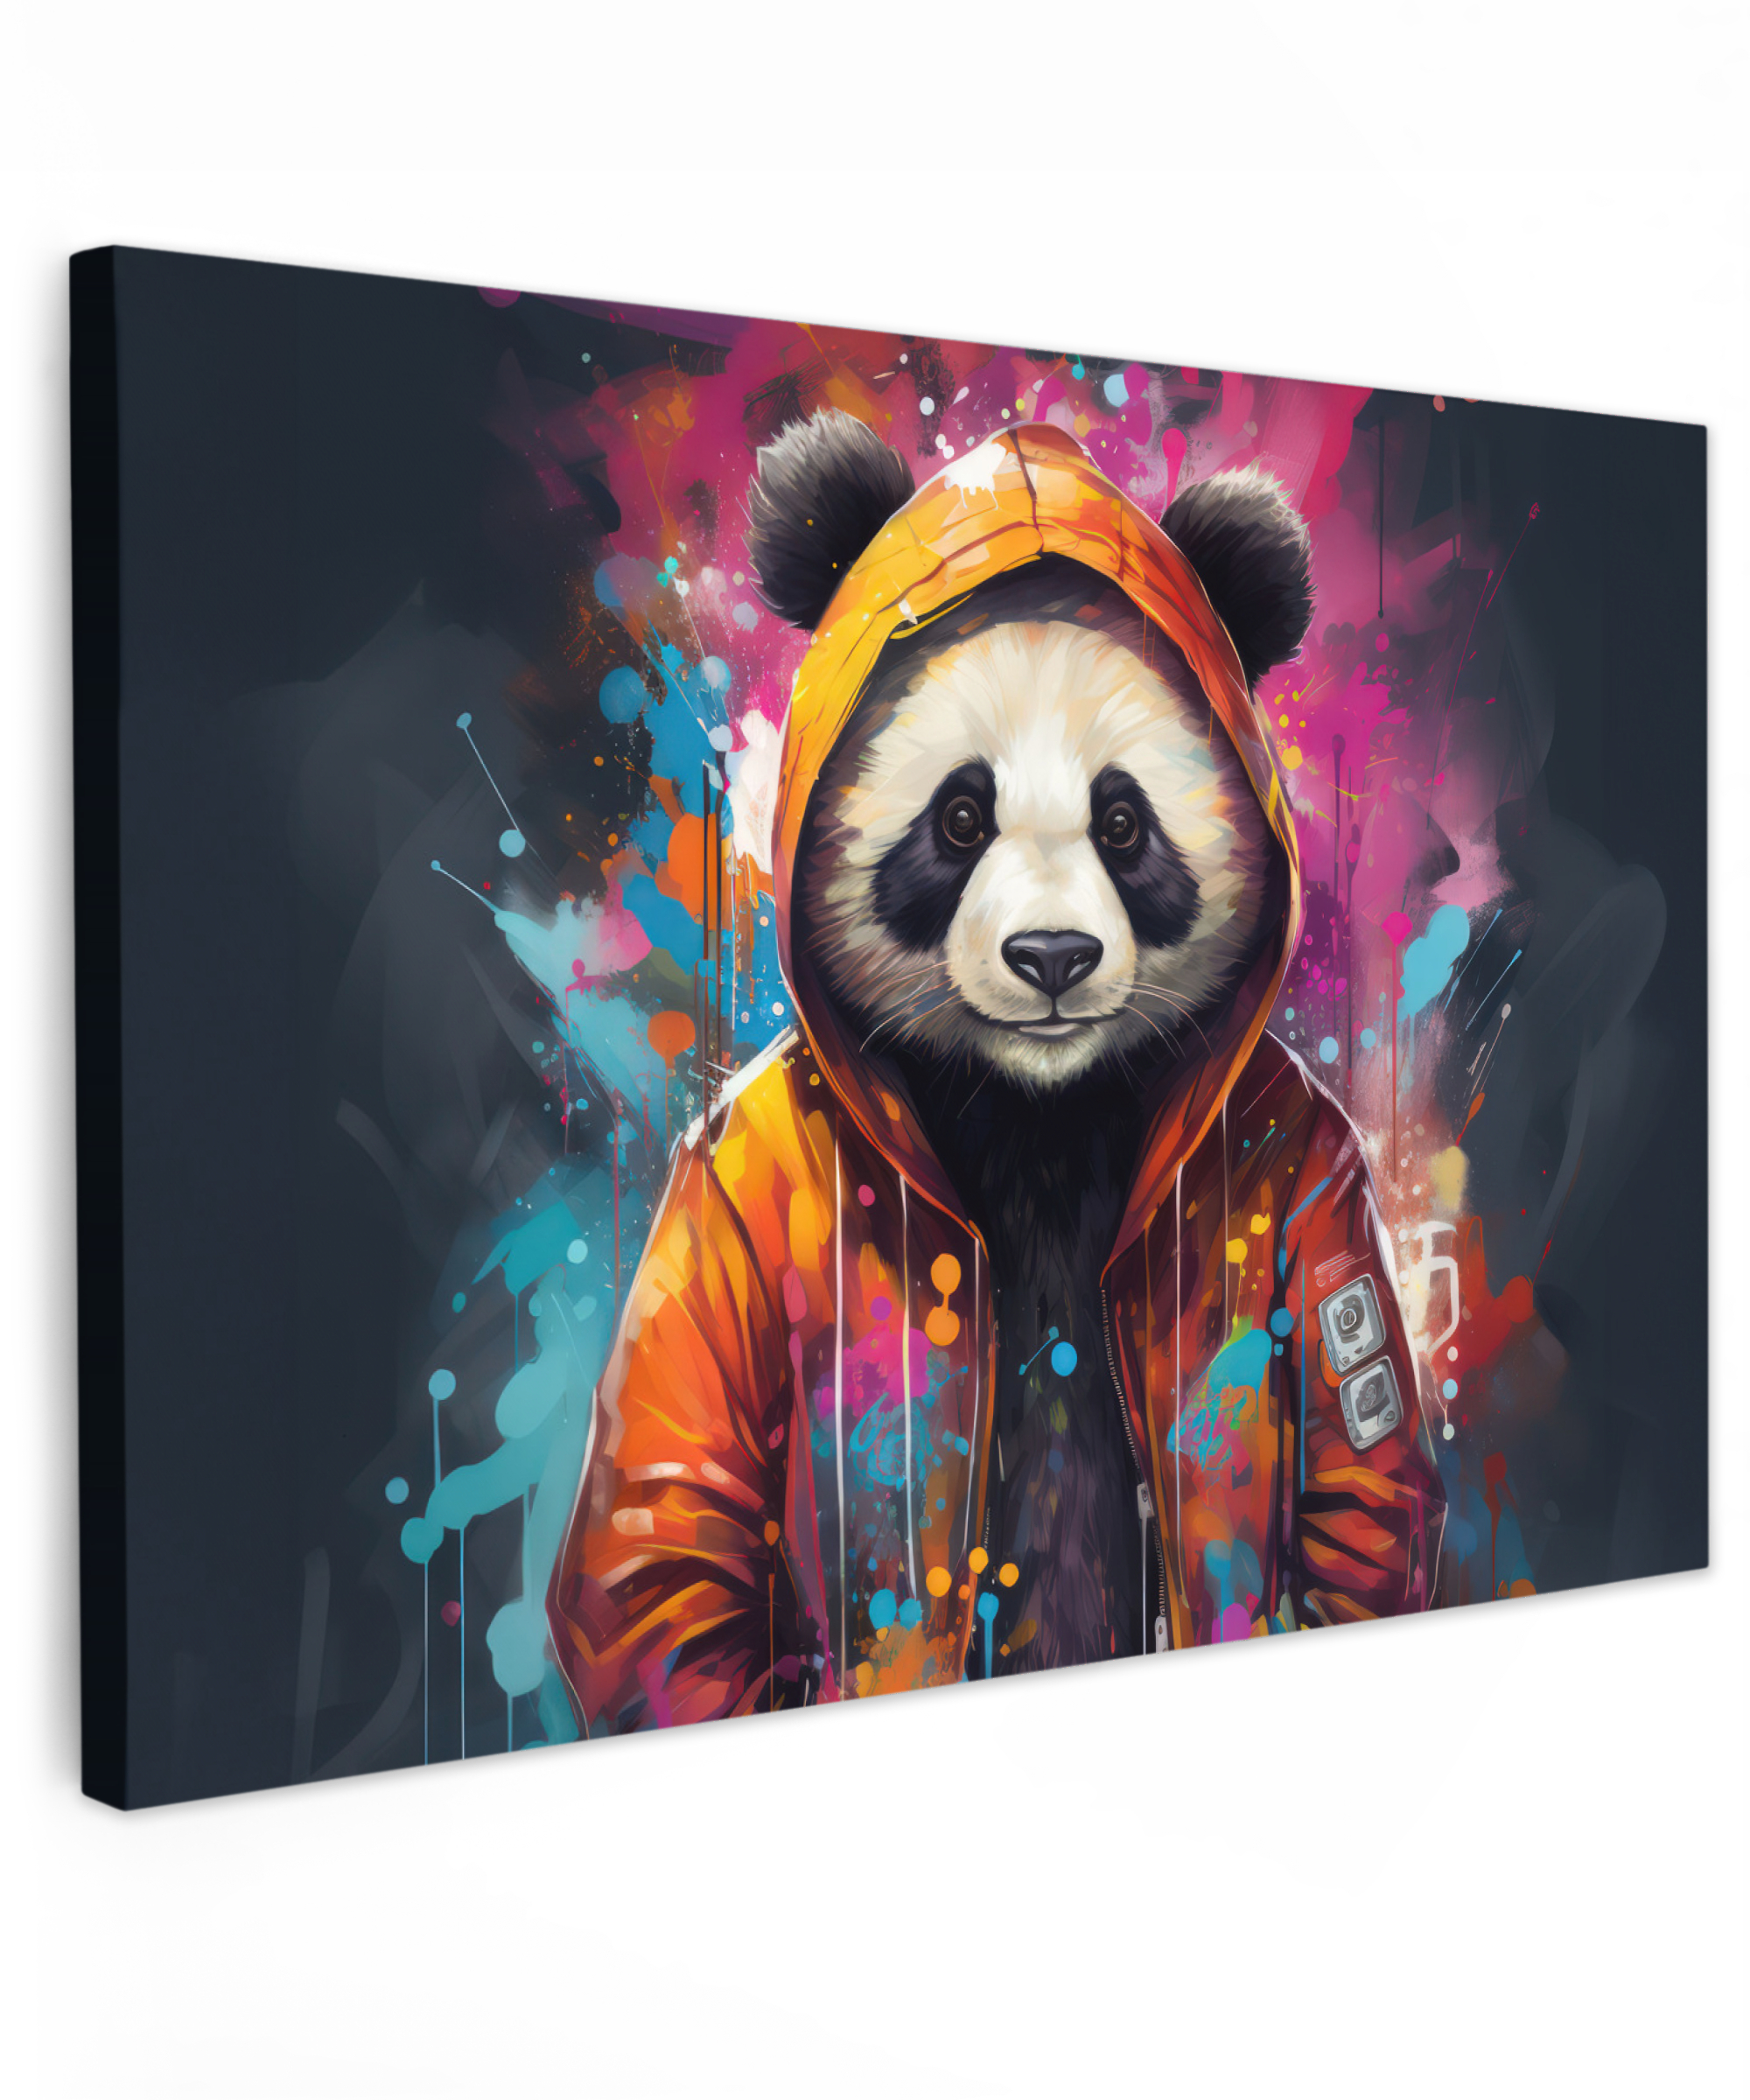 Leinwandbild - Panda - Jacke - Graffiti - Orange